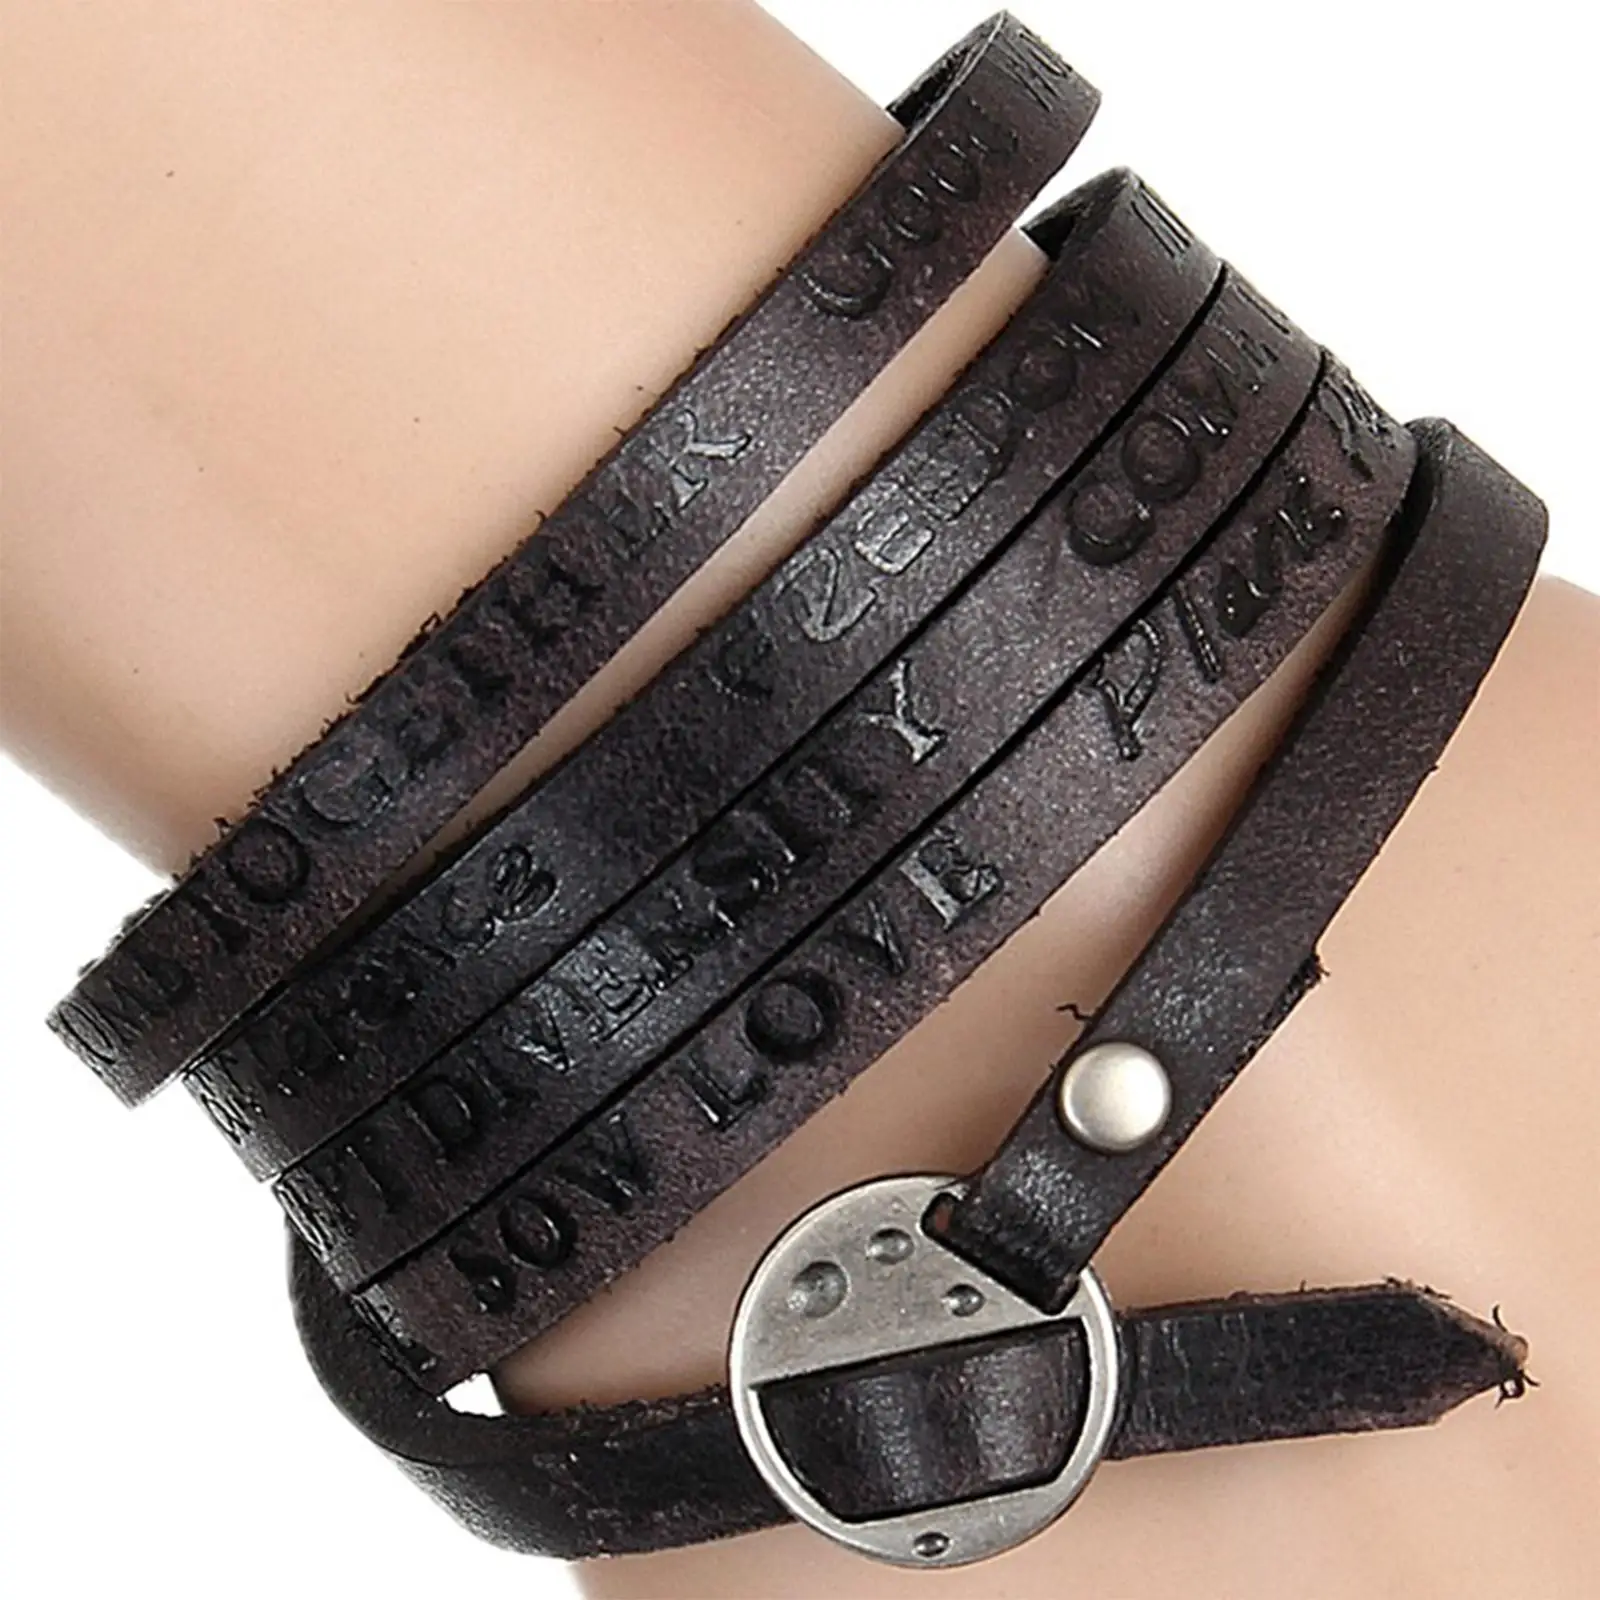 PU Leather Wide Bracelet Punk Jewelry Gifts Fashion Vintage Adjustable Wristband for Friendship Boys Husband Friend Unisex